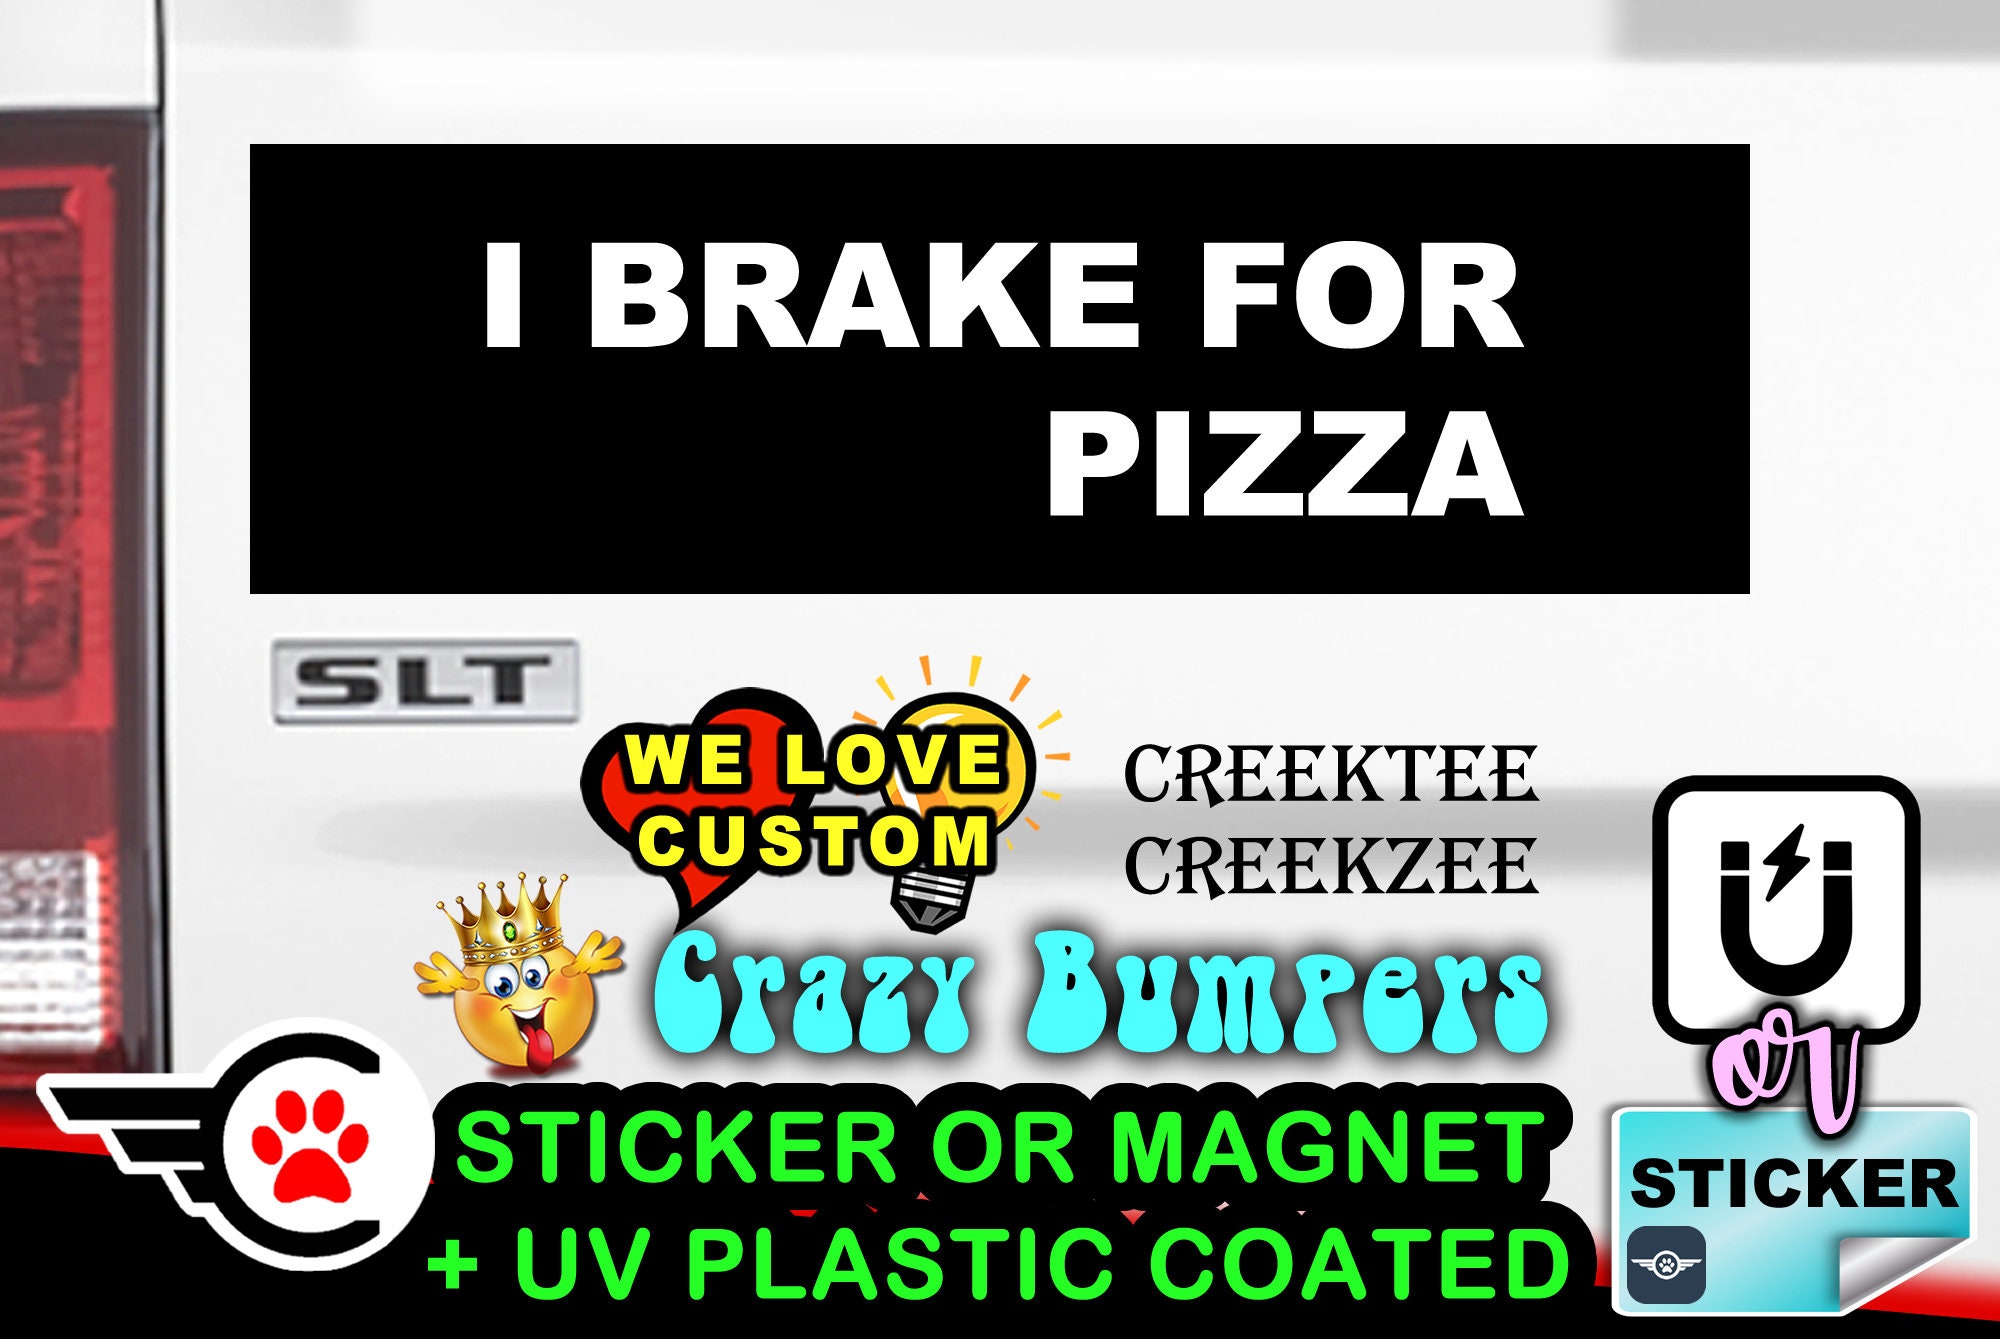 I Brake For Pizza Bumper Sticker or Magnet in various sizes